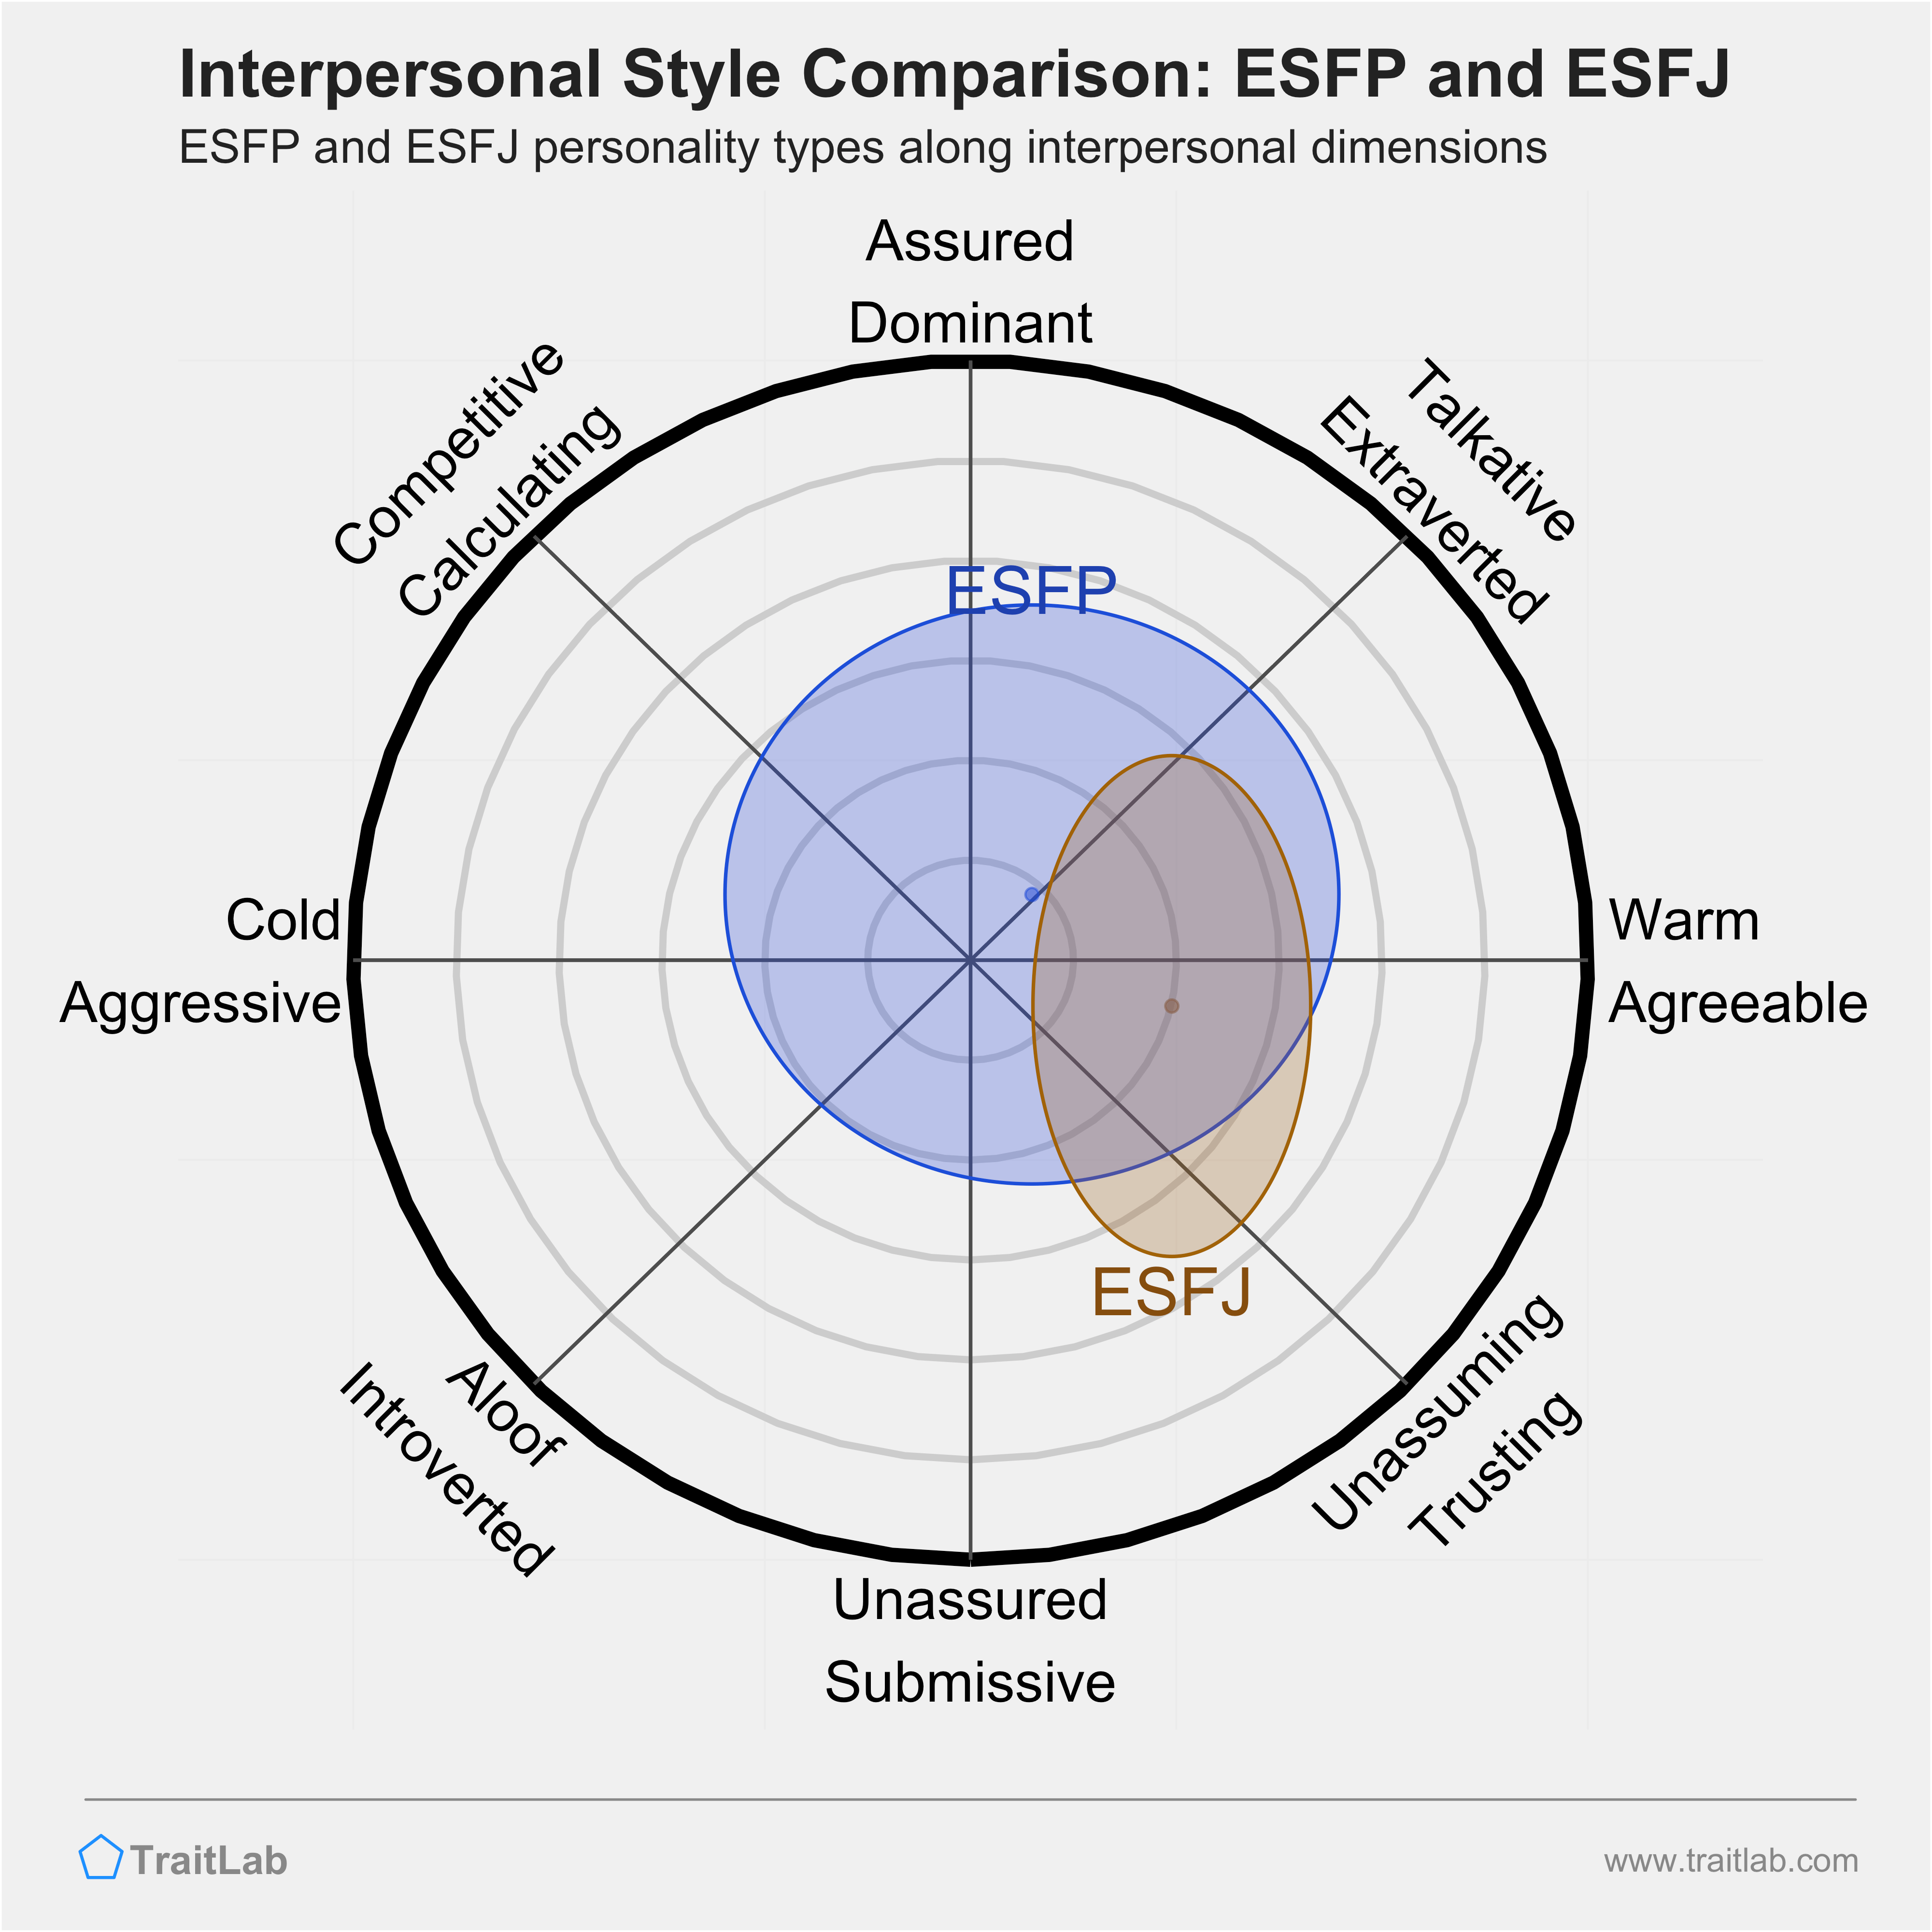 ESFP and ESFJ comparison across interpersonal dimensions